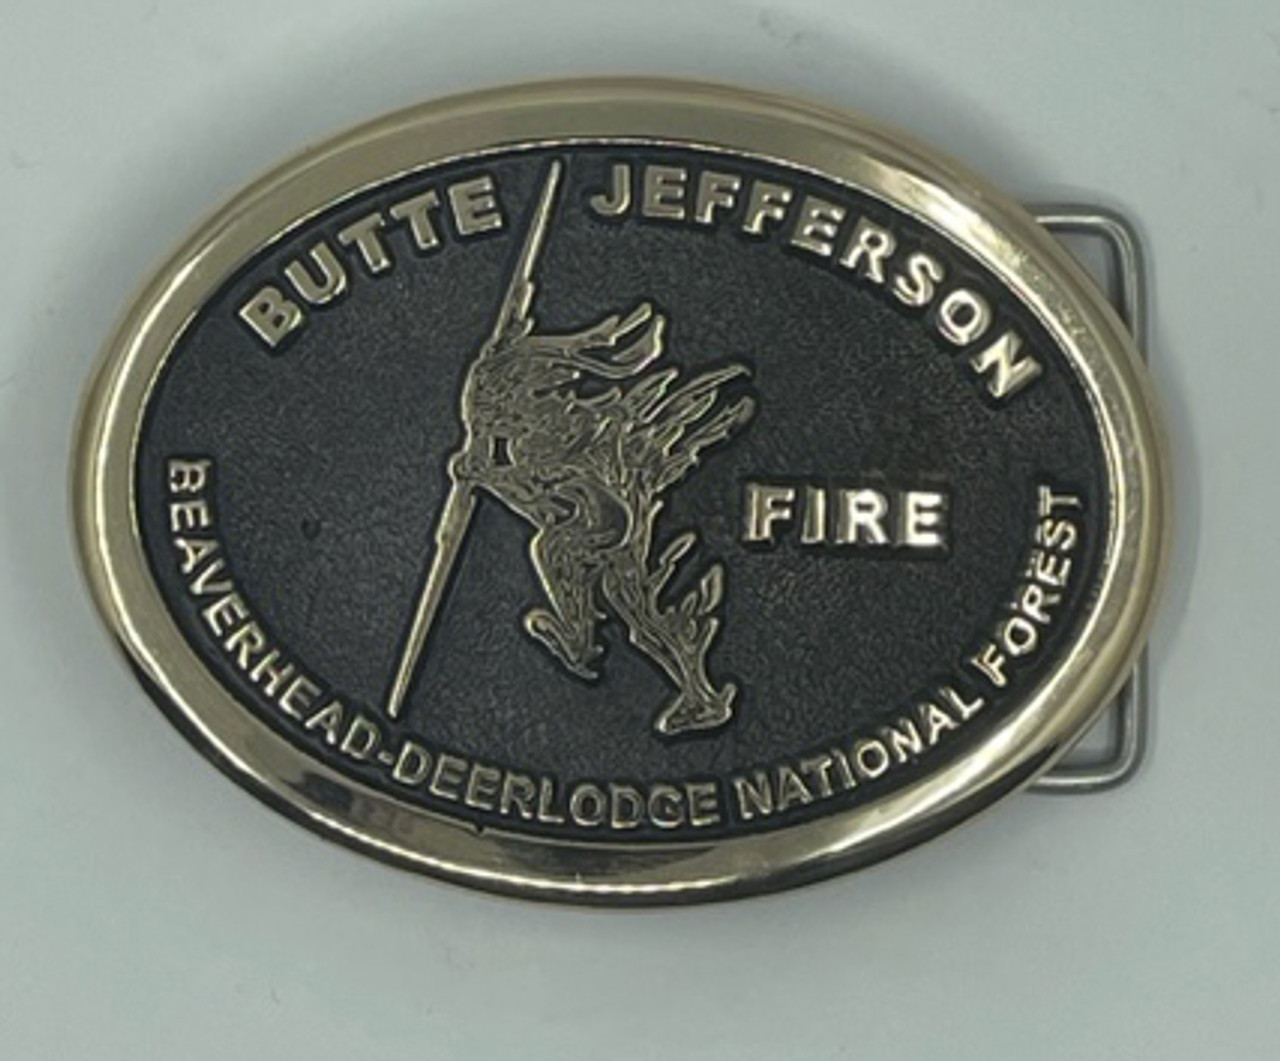 Butte Jefferson Fire Beaverhead-Deerlodge National Forest Buckle (RESTRICTED)